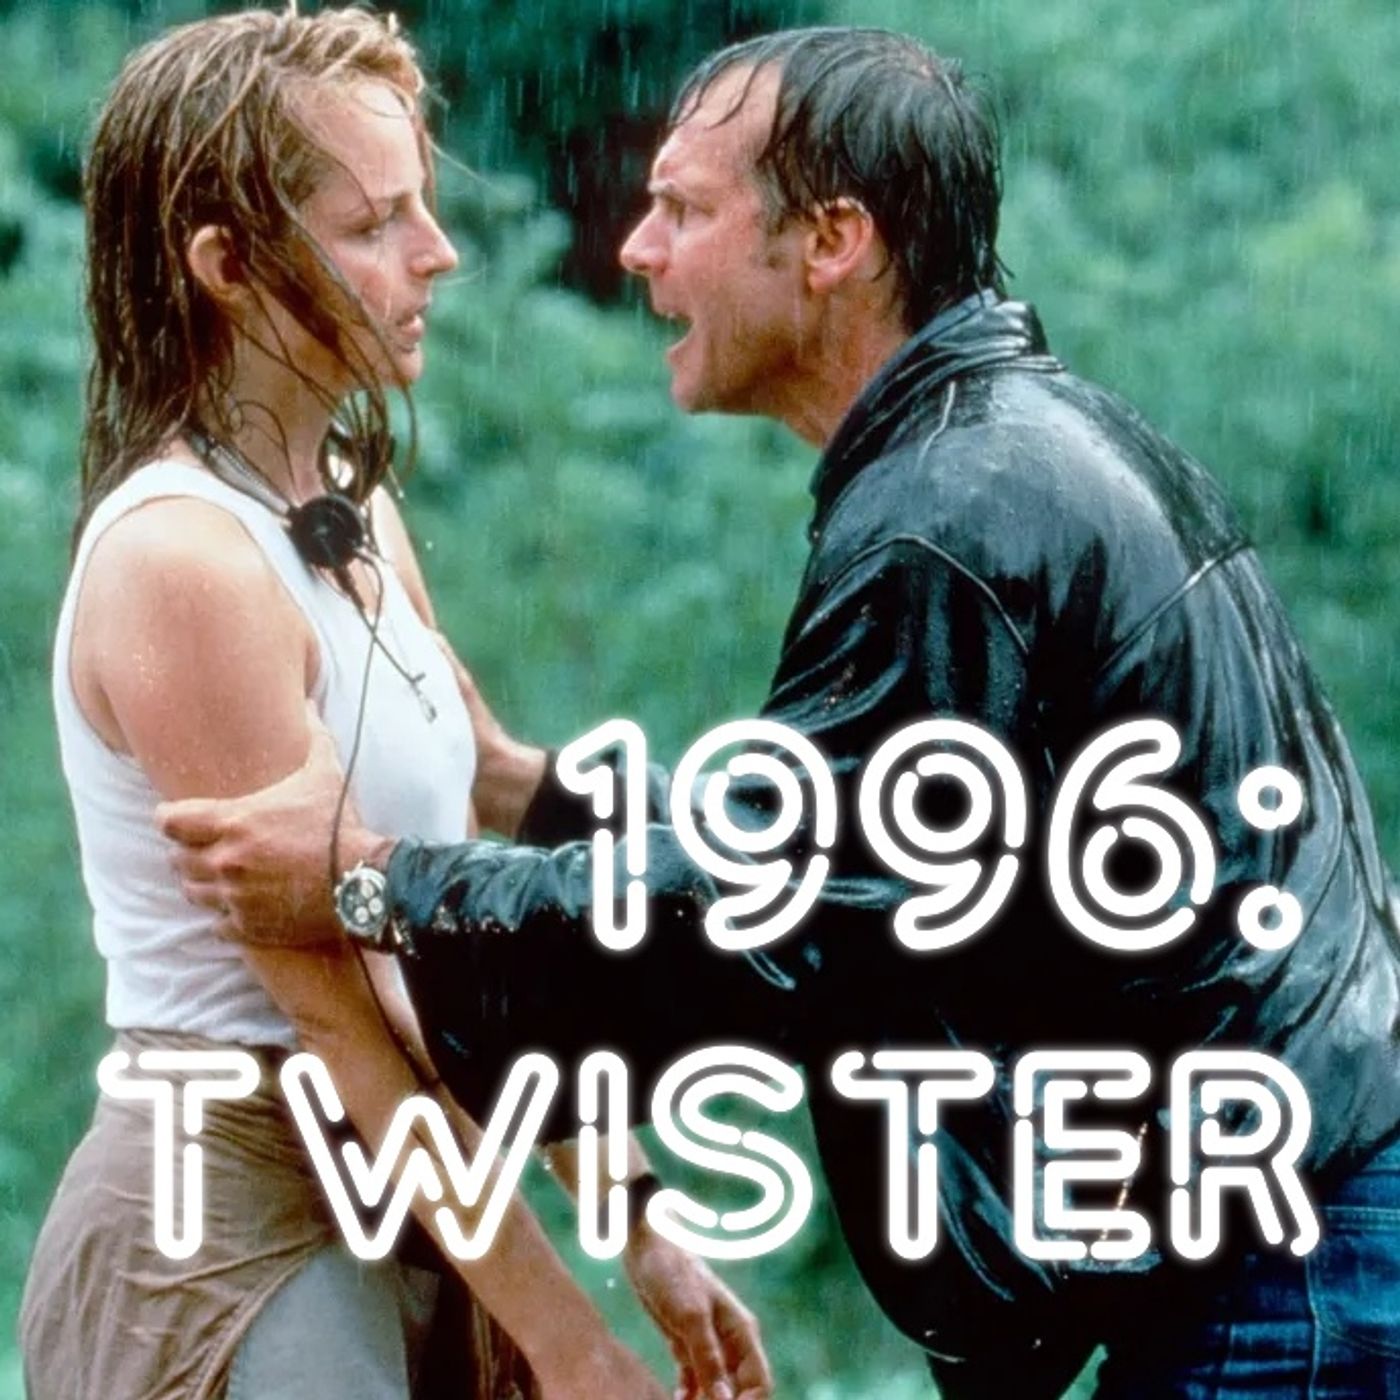 1996: Twister